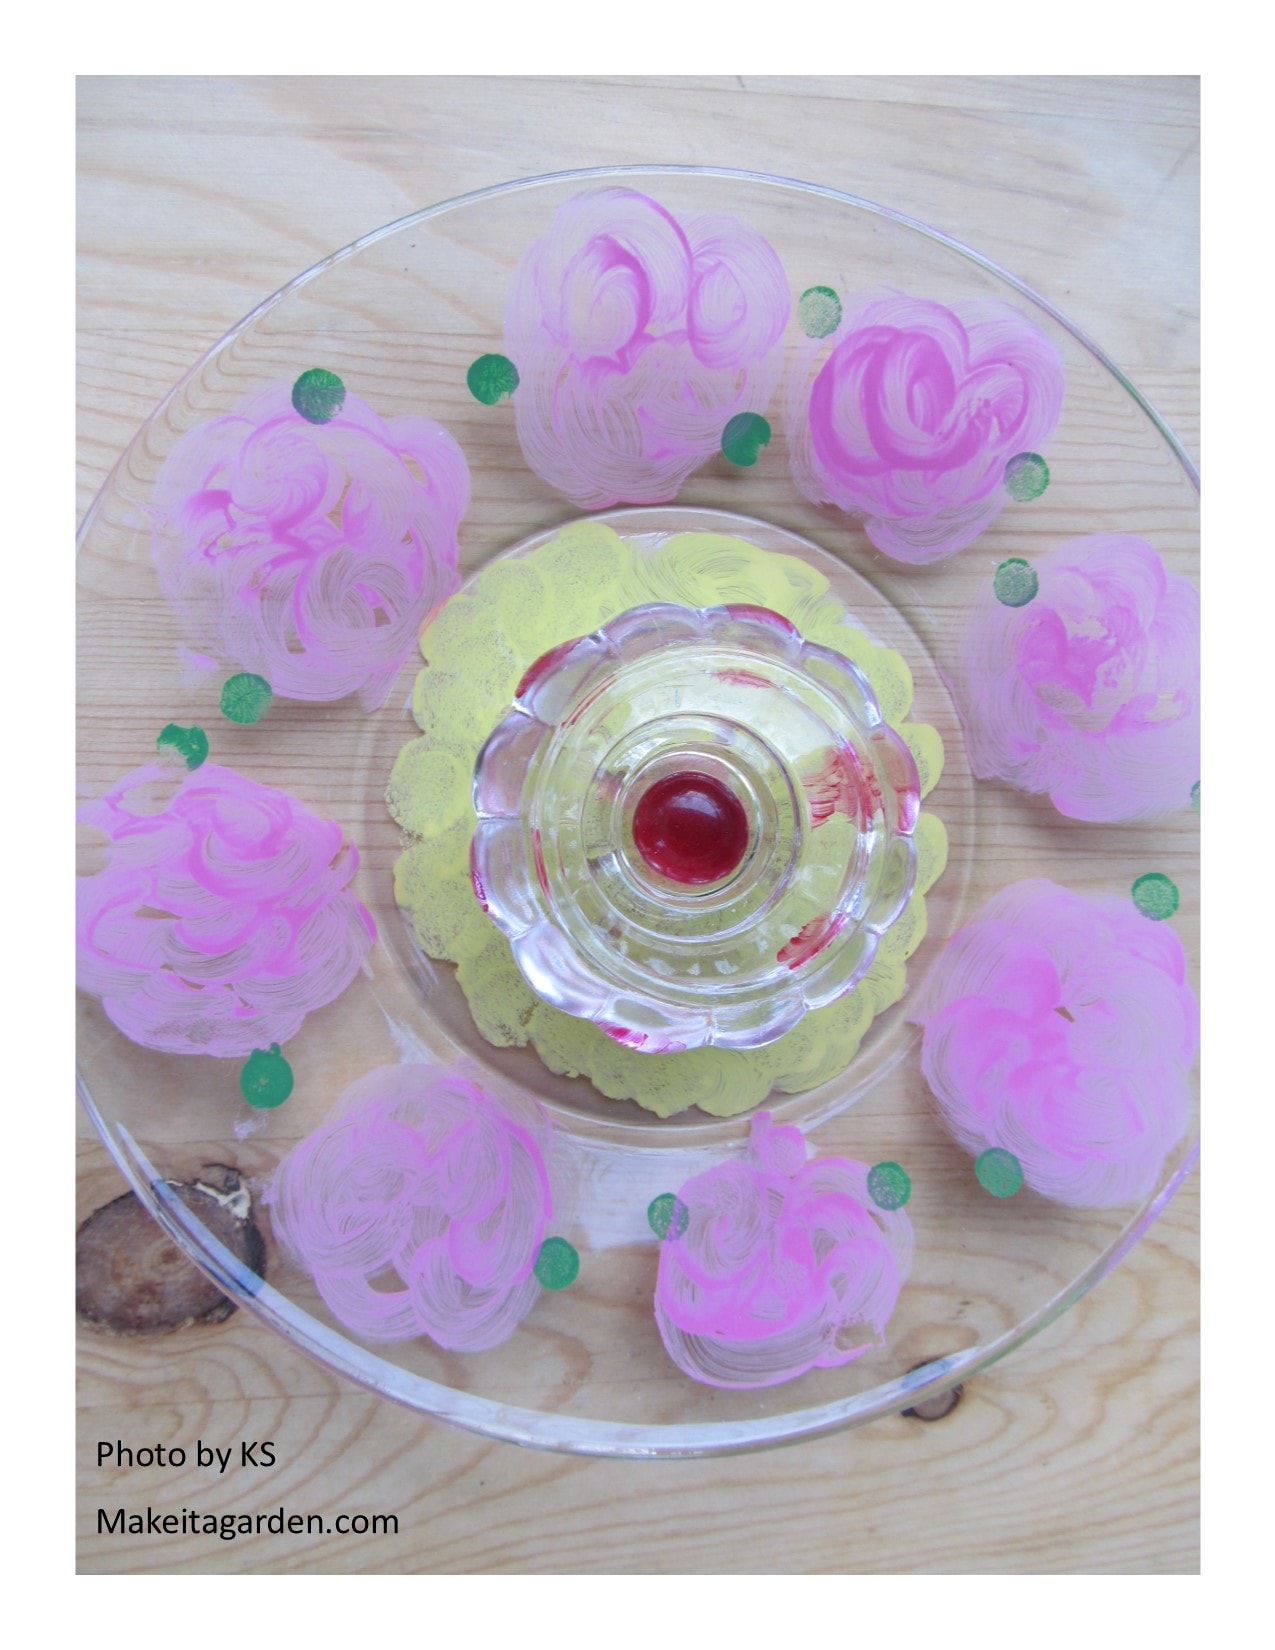  rosenblume auf Glasplatte gemalt